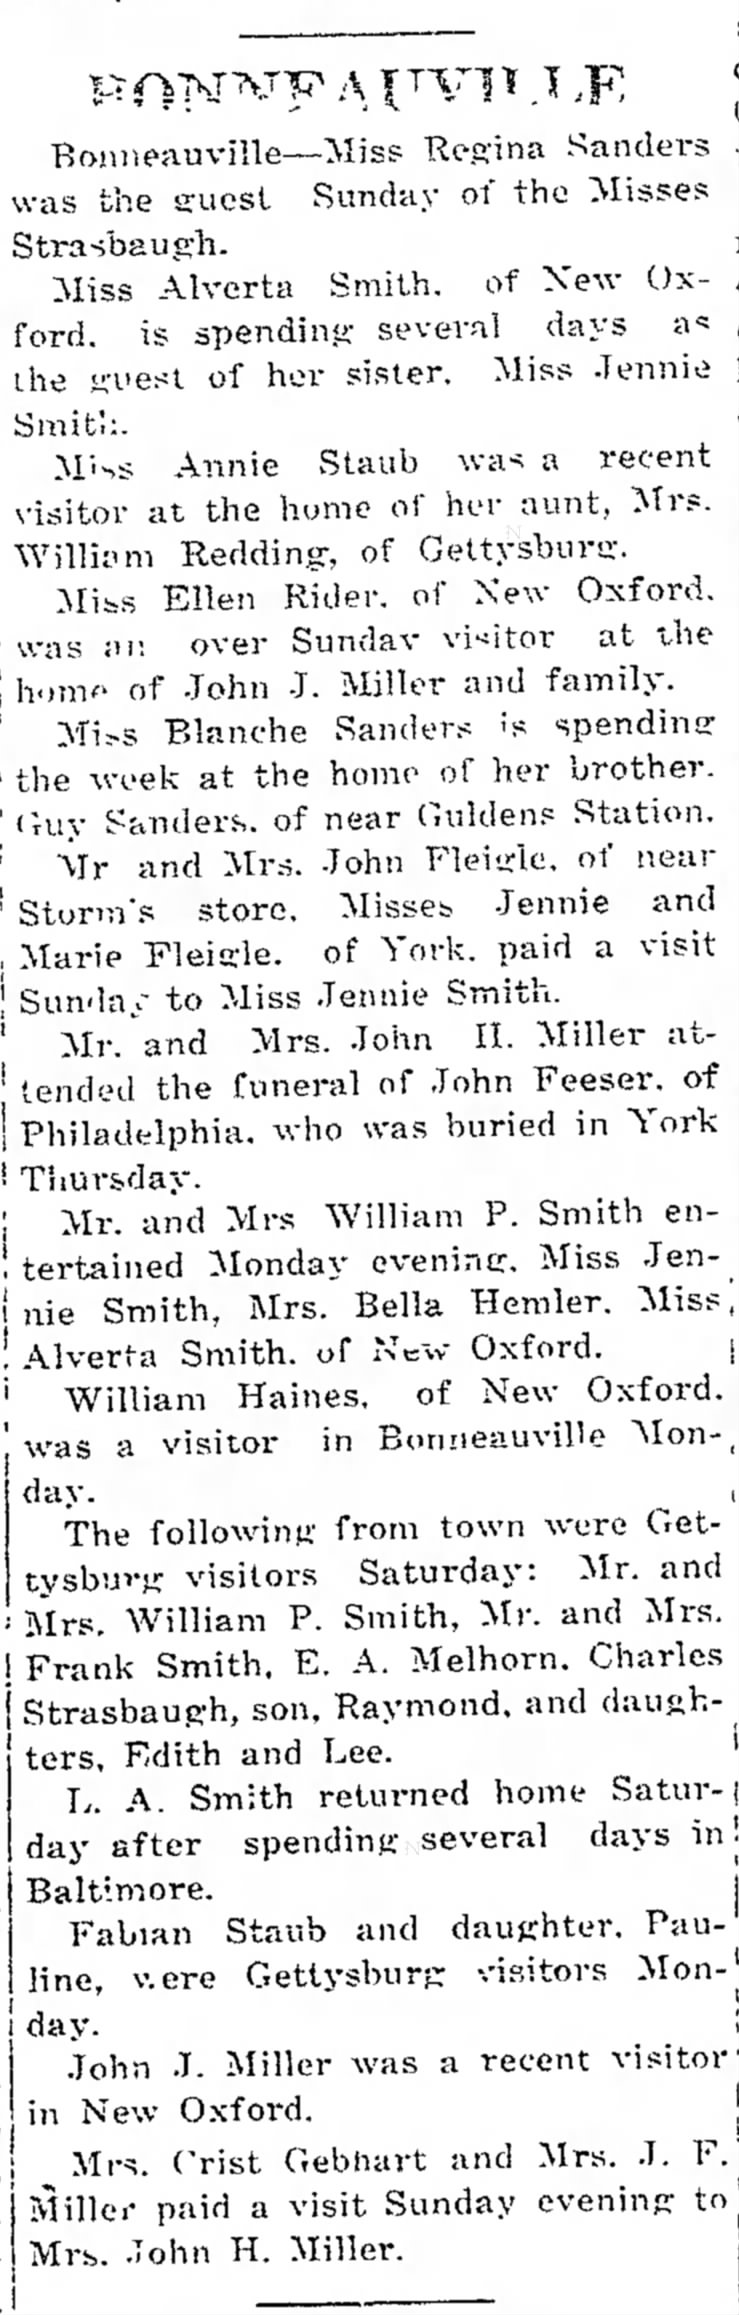 1917 MM Jn H Miller attend Jn Feeser funeral, burial in York